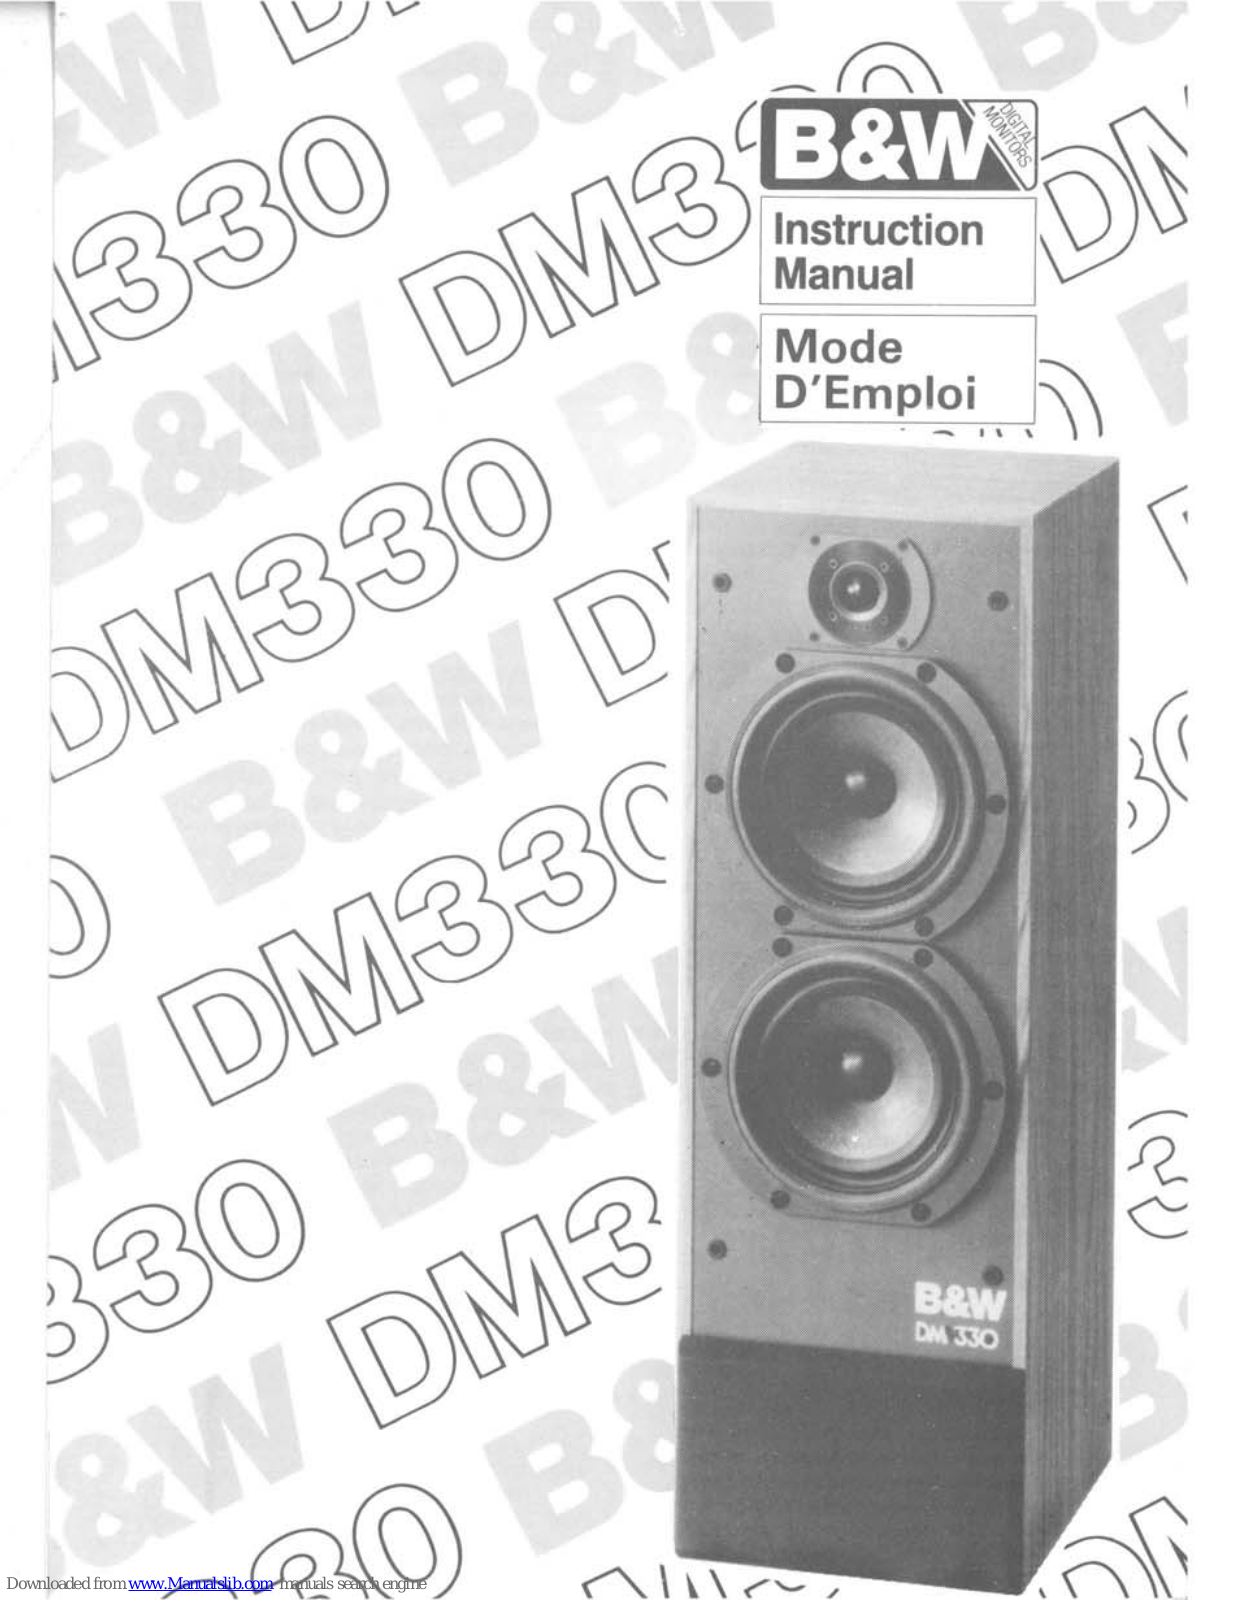 B&W electronics DM330 Instruction Manual